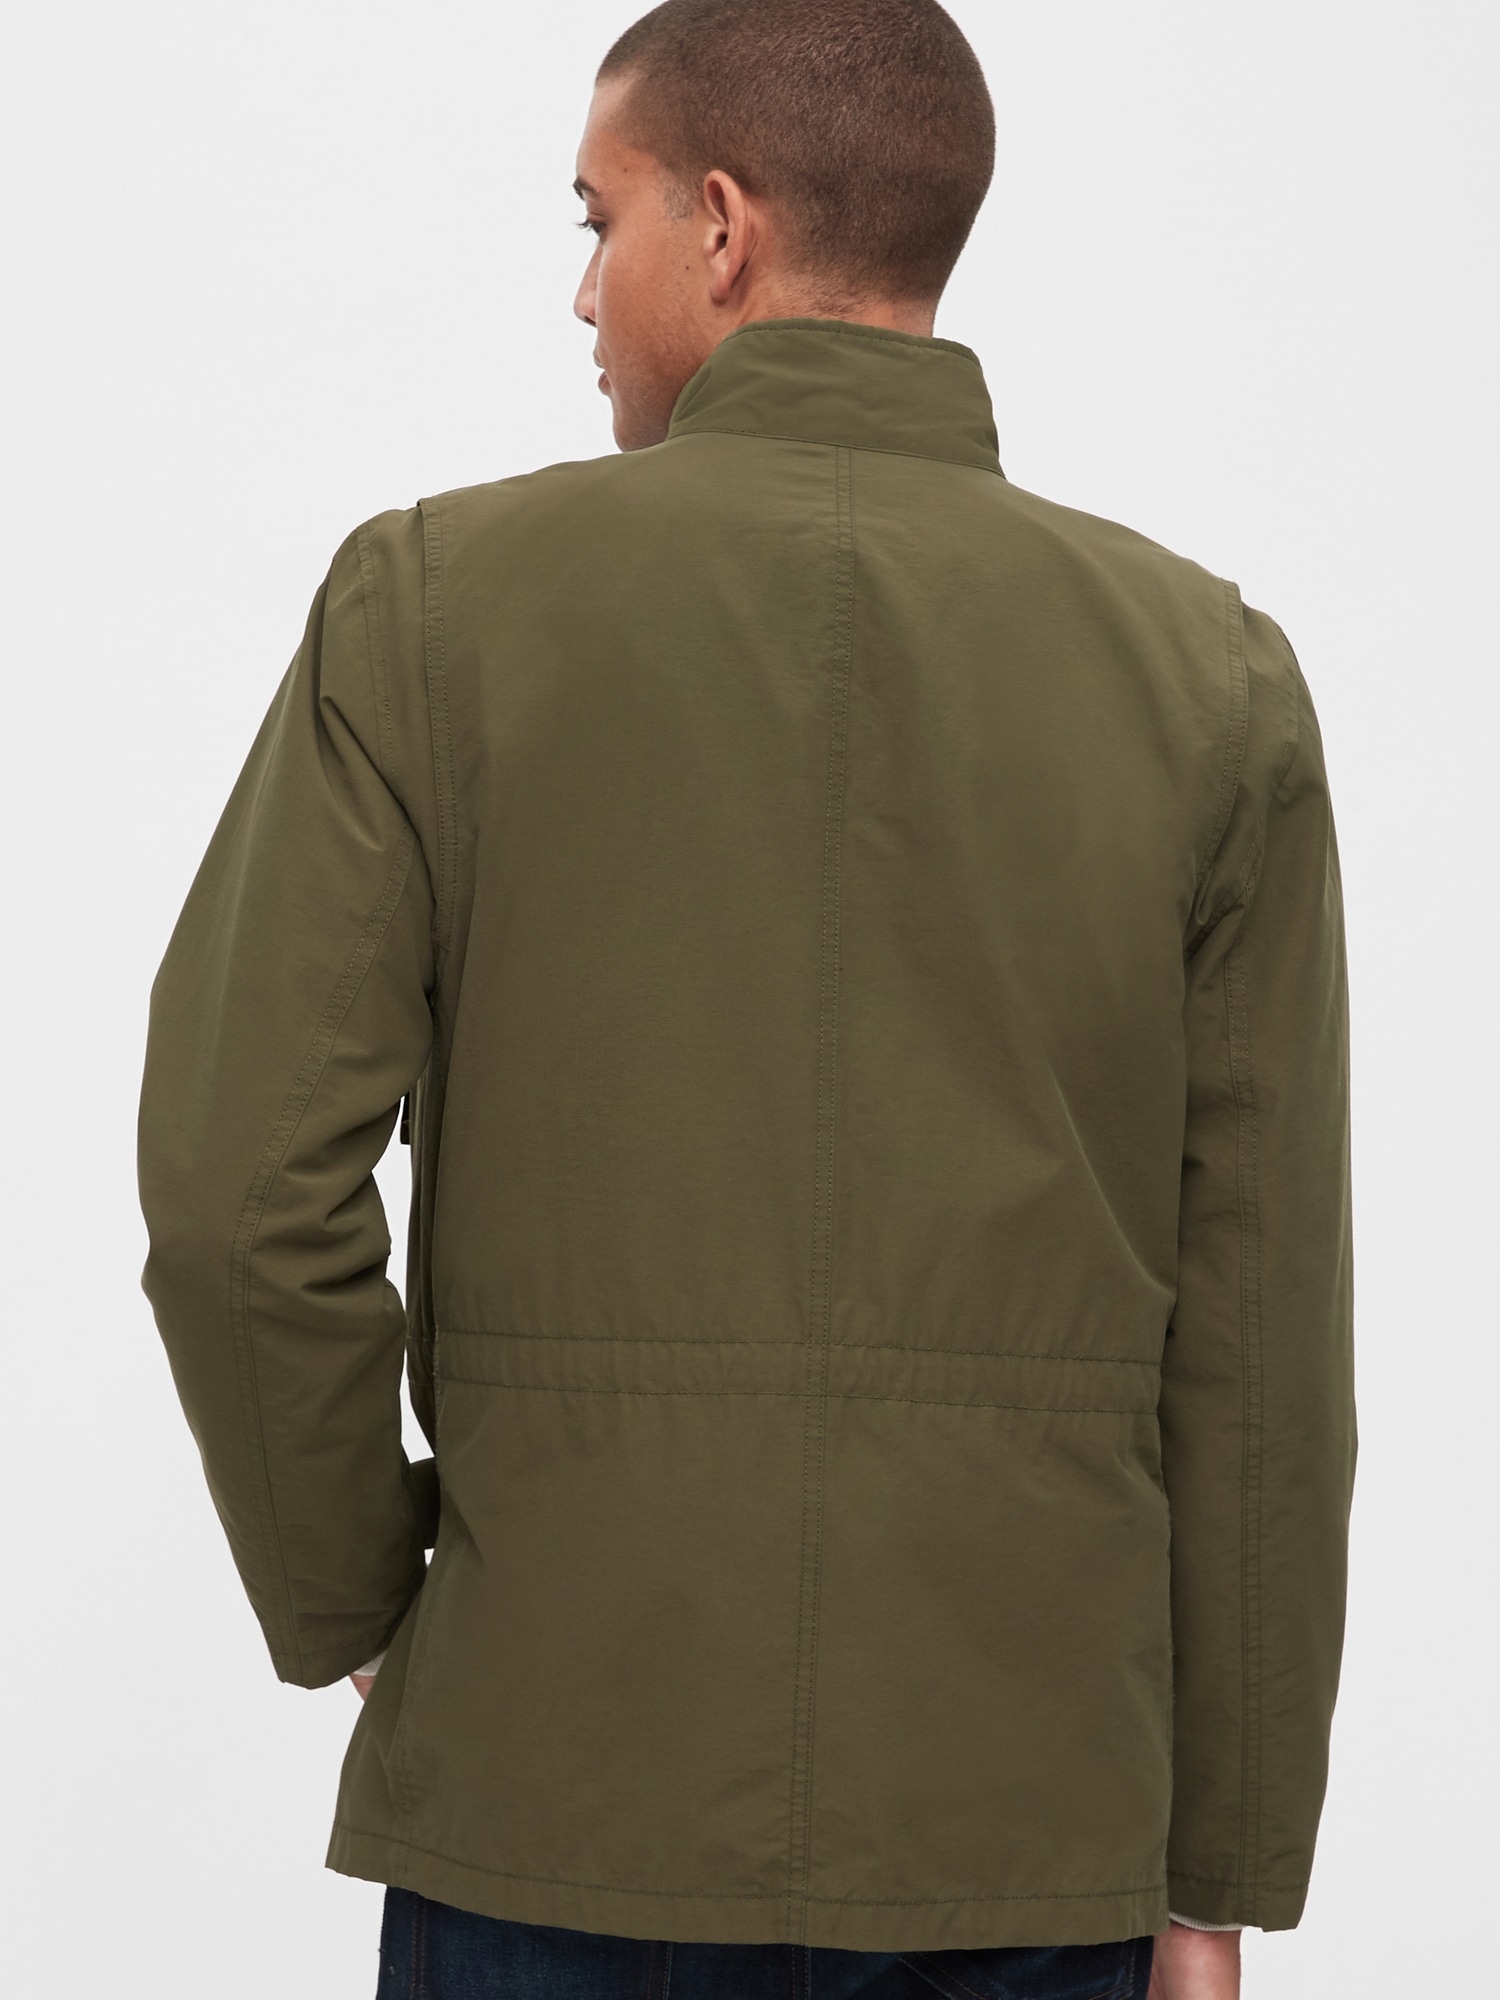 Military Jacket | Gap